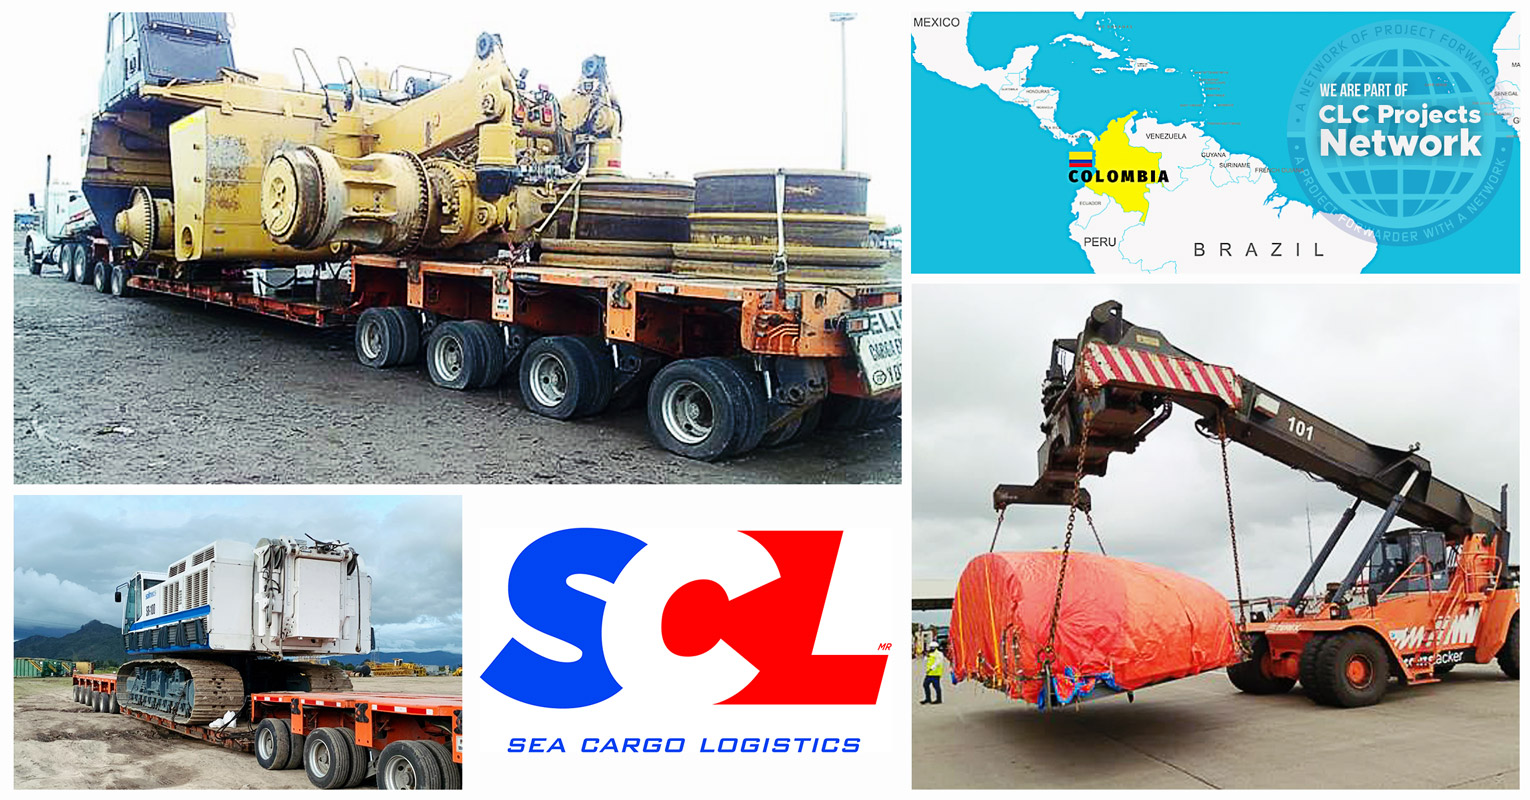 New member representing Colombia – Sea Cargo Logistics